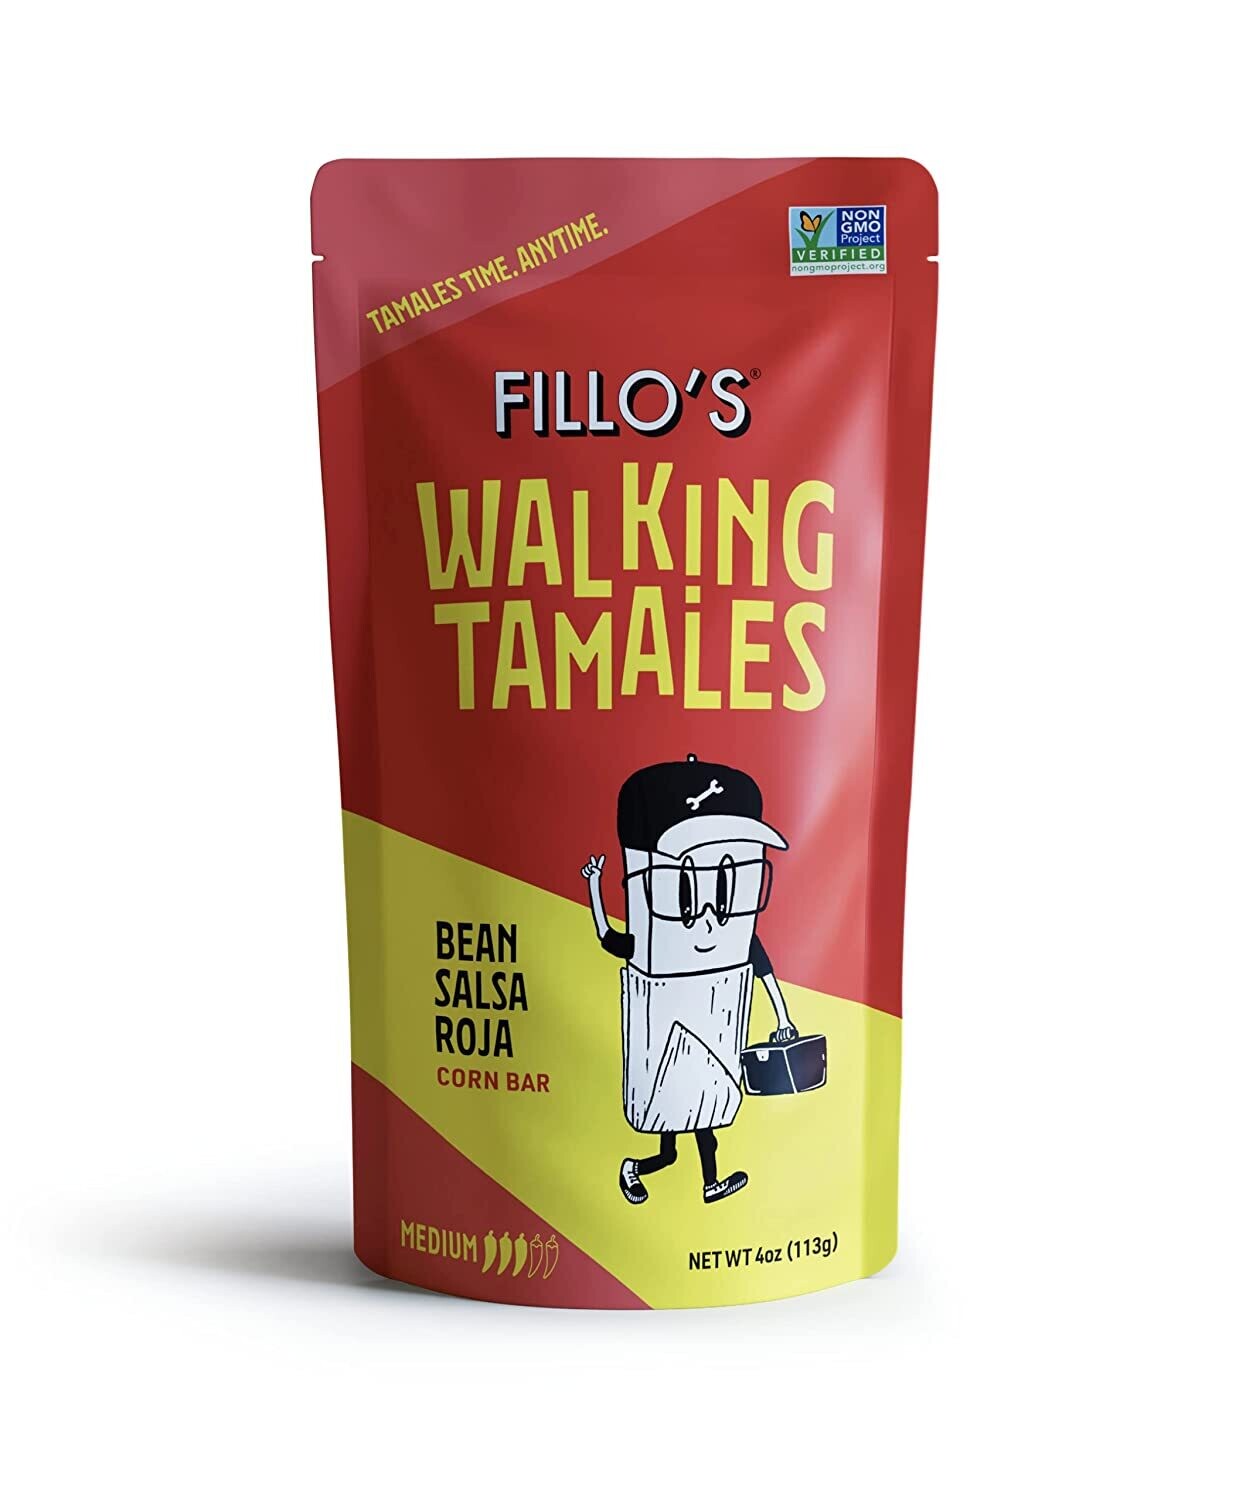 Fillo's Walking Tamales Corn Bar - Bean Salsa Roja (medium)